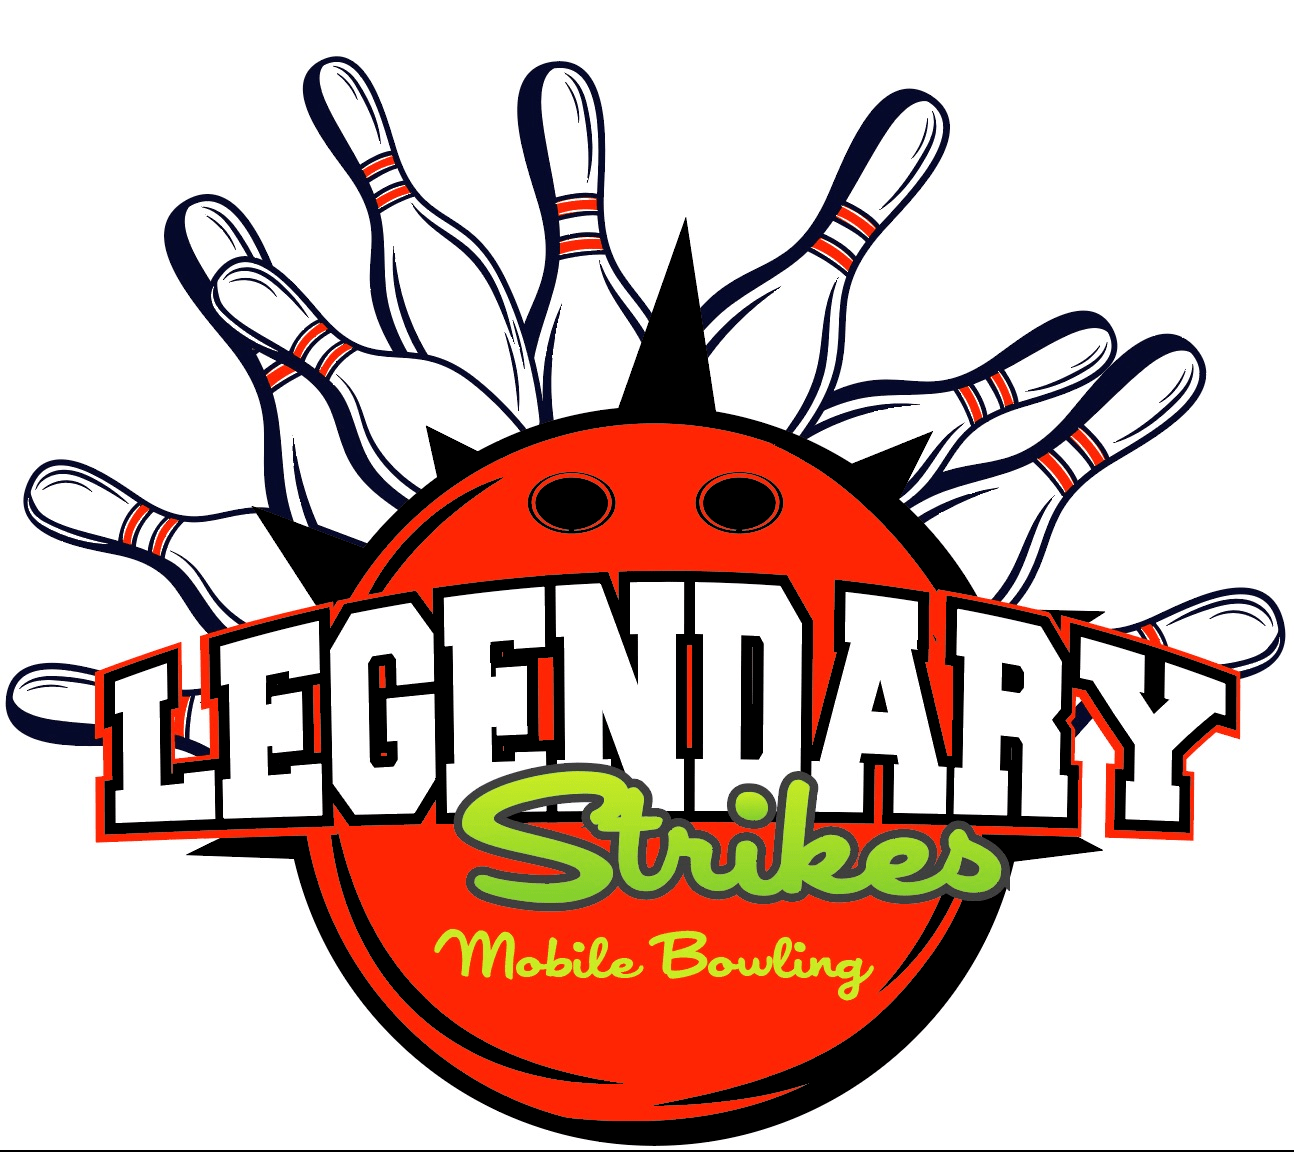 Legendary Strikes  Team events, Bowling, Bachelor/bachelorette party